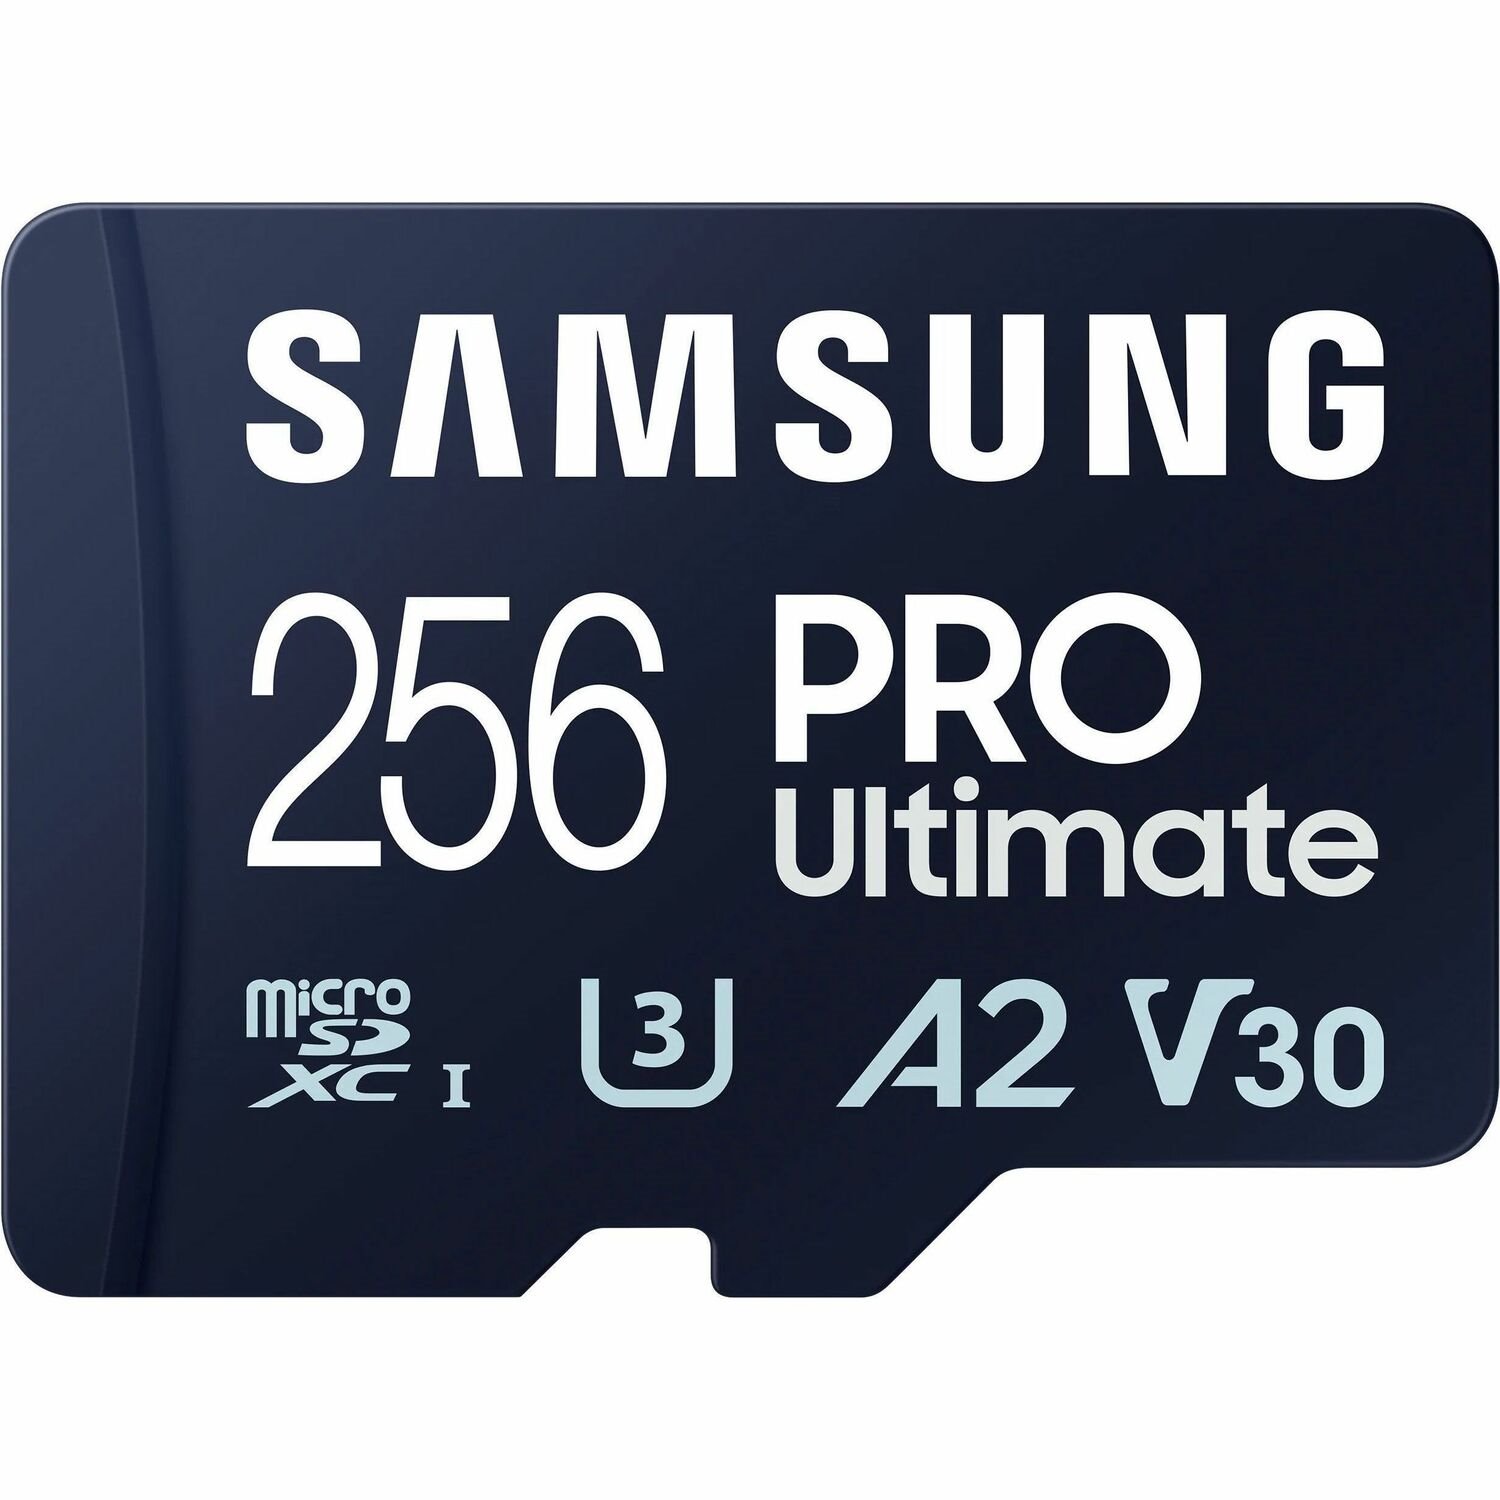 Samsung PRO Ultimate 256 GB Class 10/UHS-I (U3) V30 microSDXC